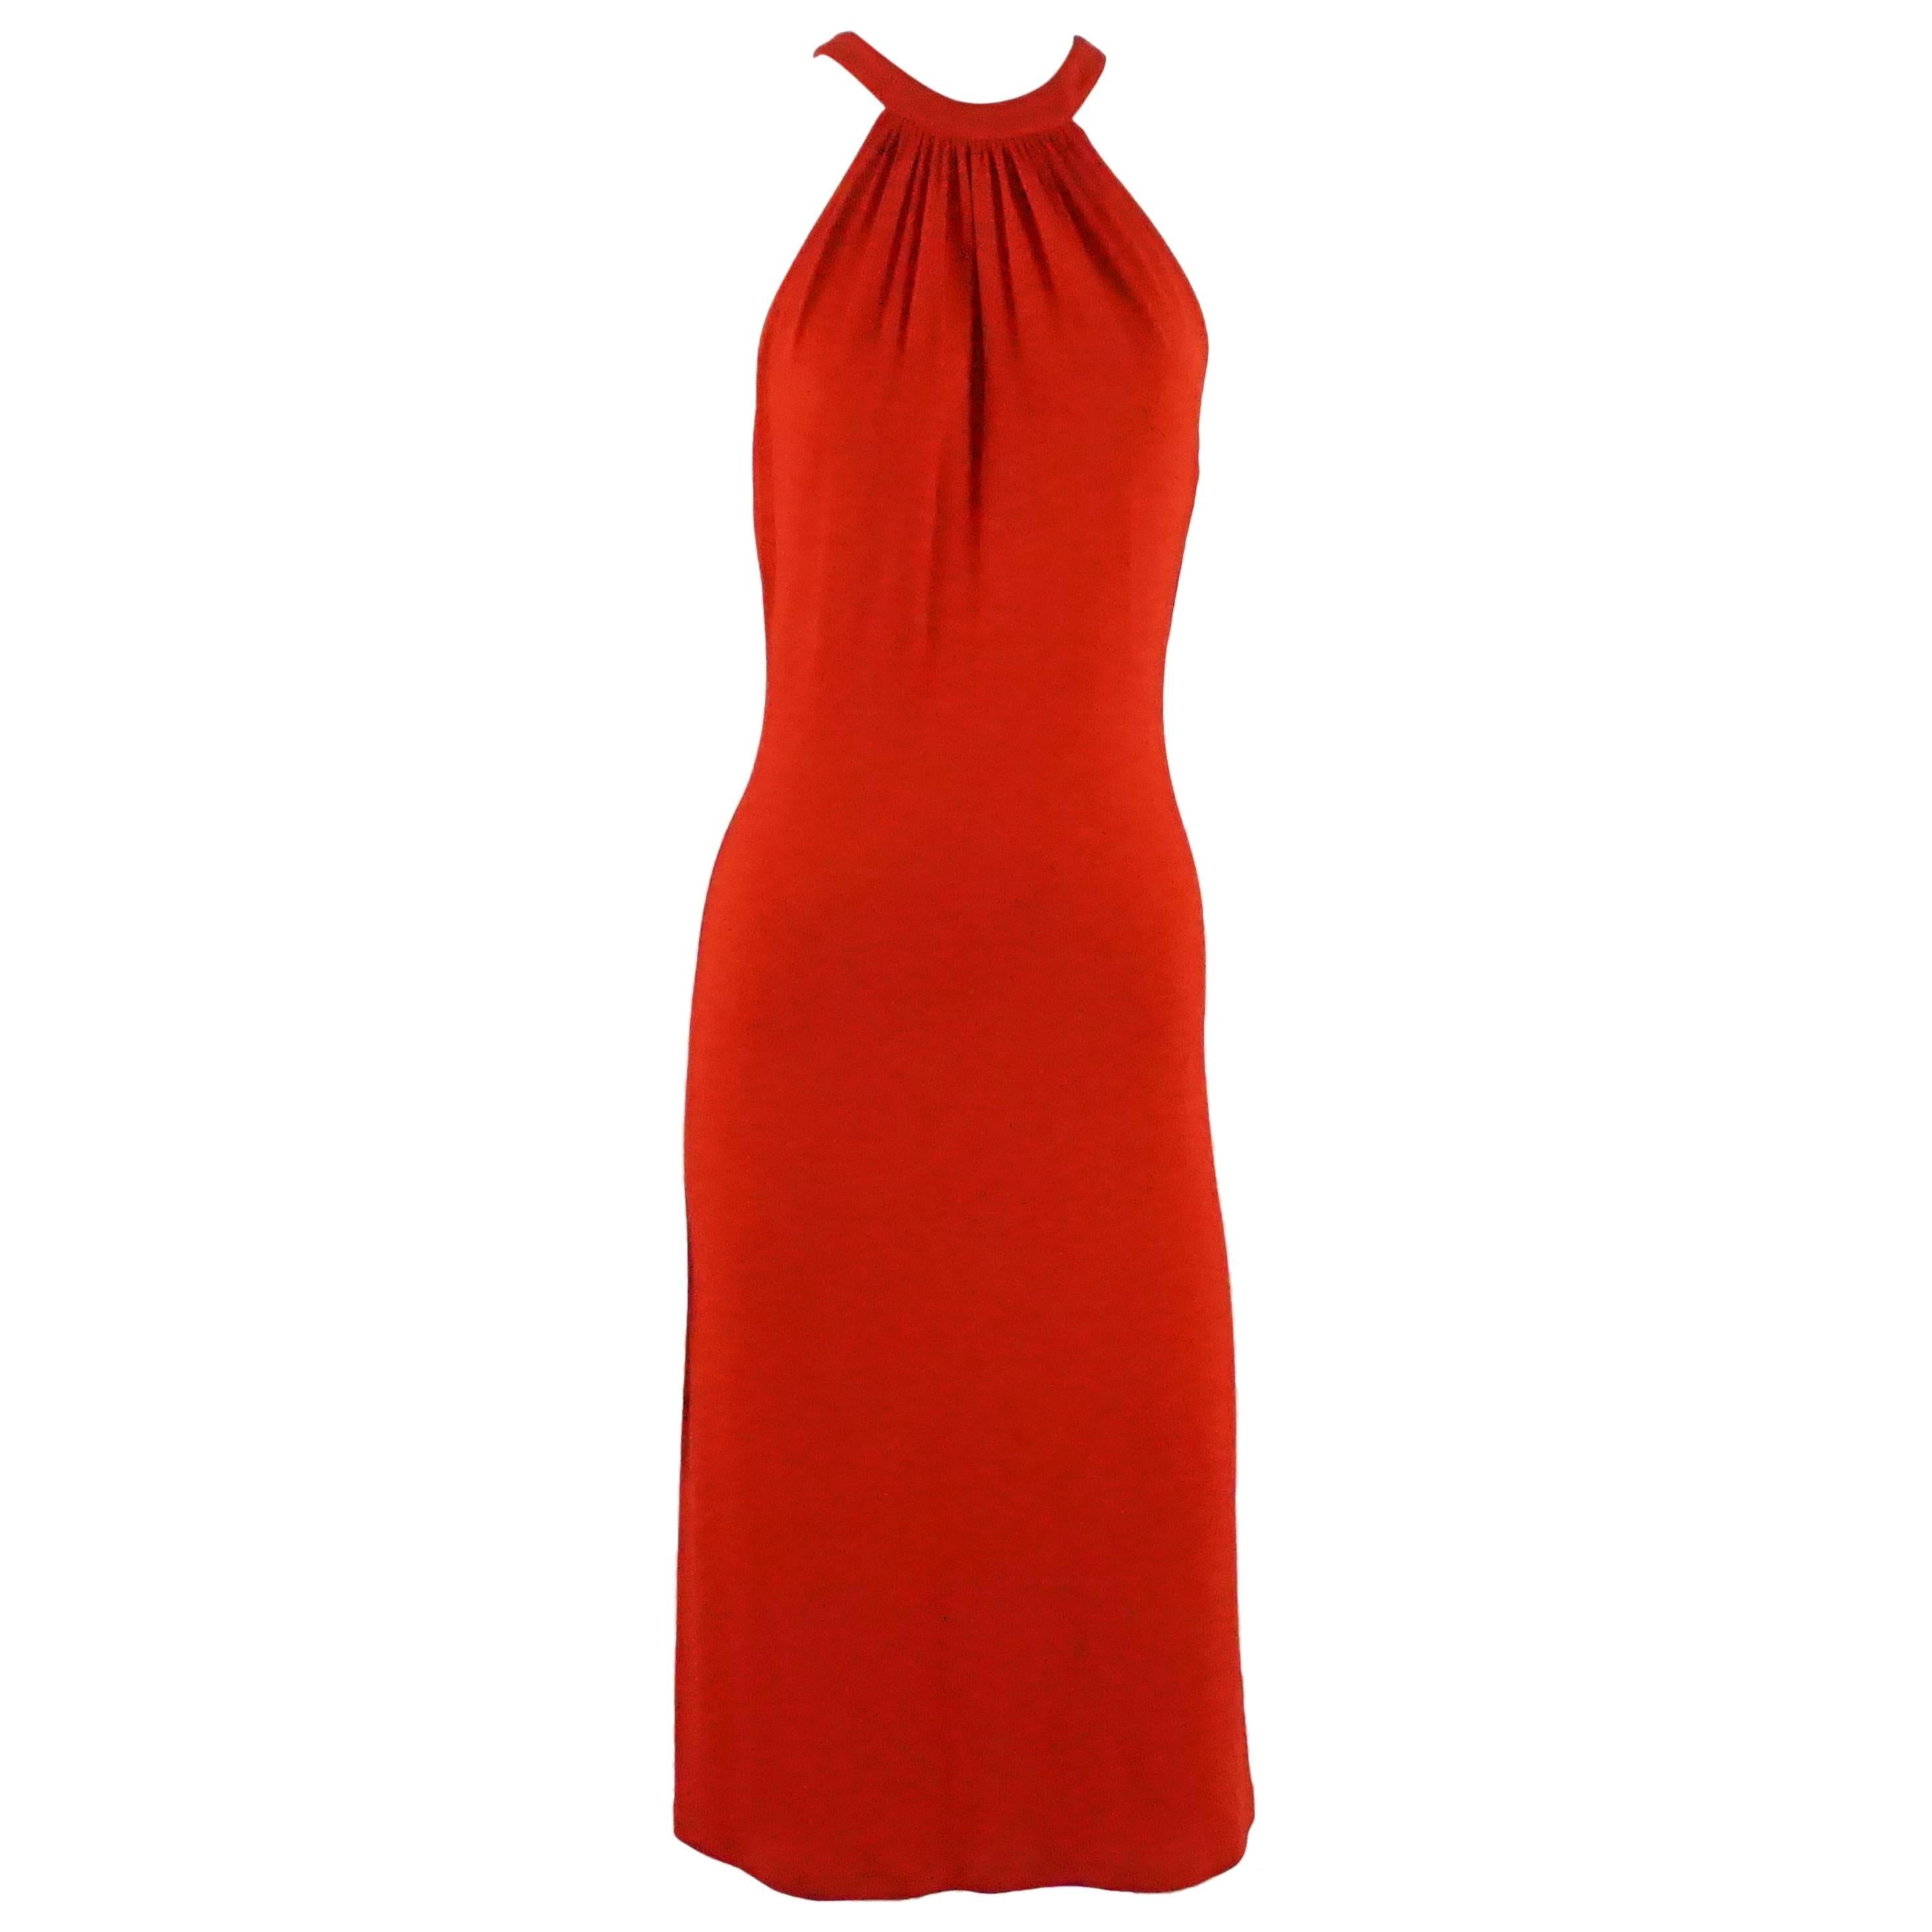 Celine Red Jersey Halter Dress with Keyhole Cutout Back - 38